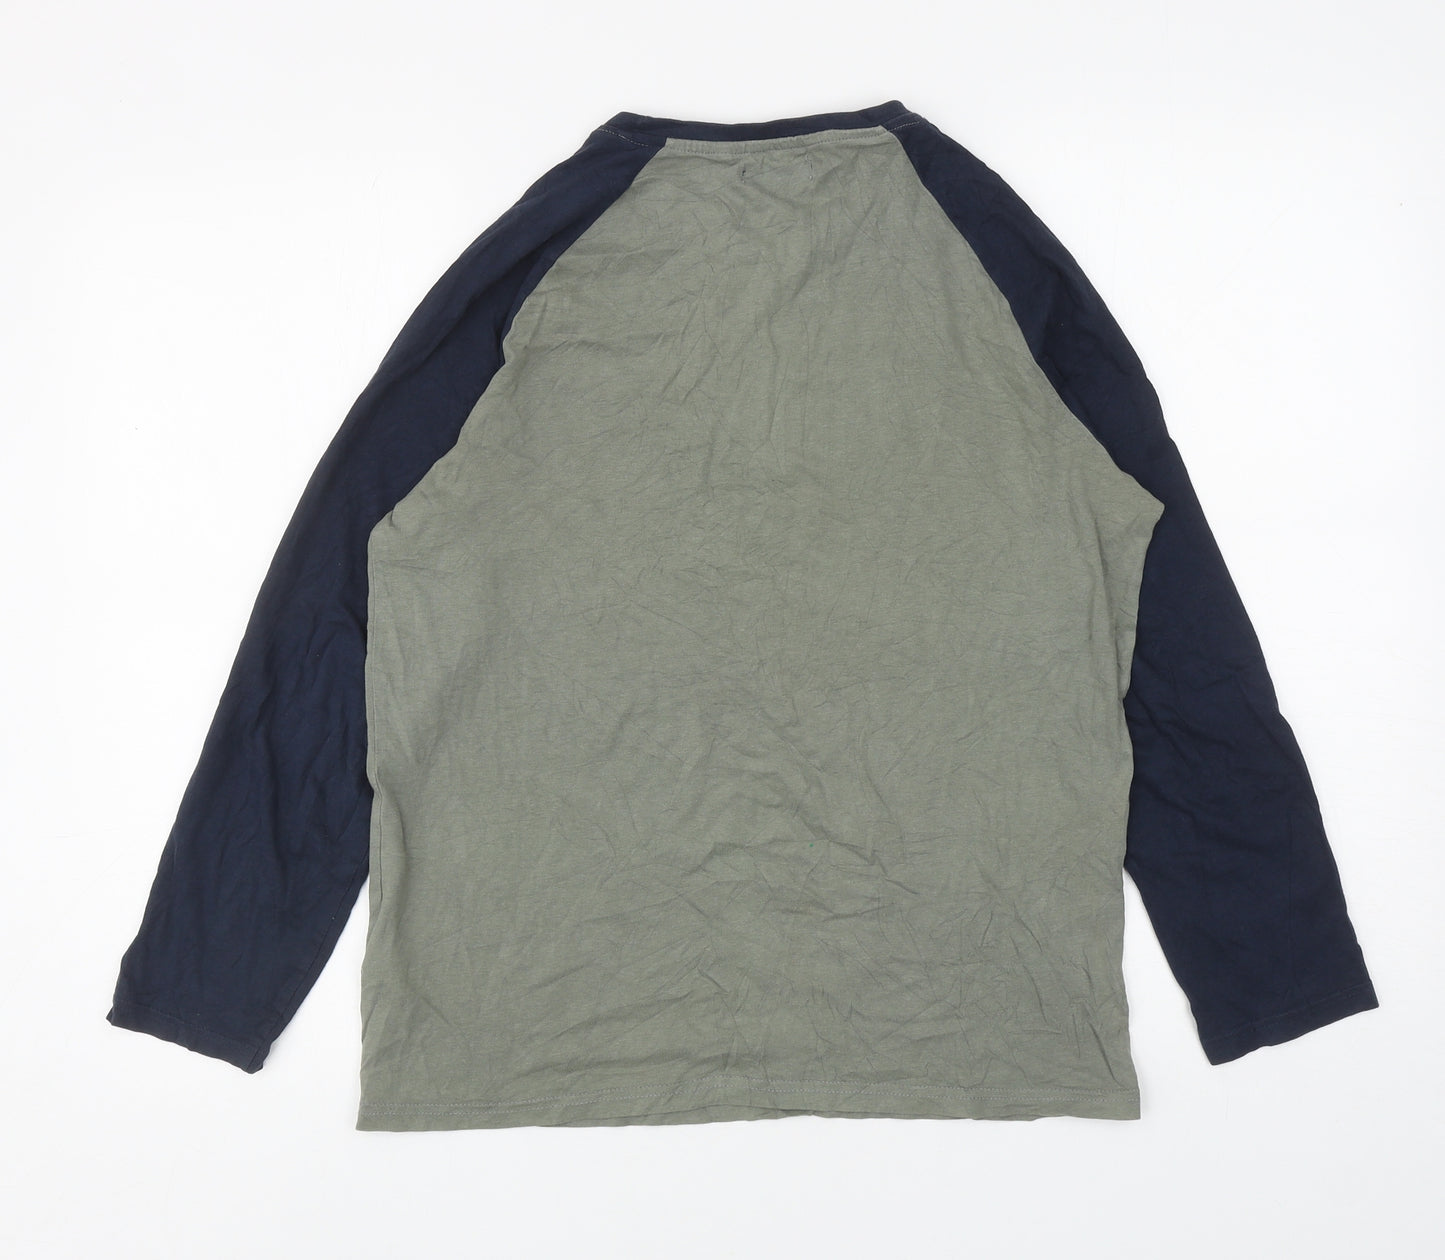 Henri Lloyd Boys Green Colourblock Cotton Ringer T-Shirt Size 14-15 Years Round Neck Pullover